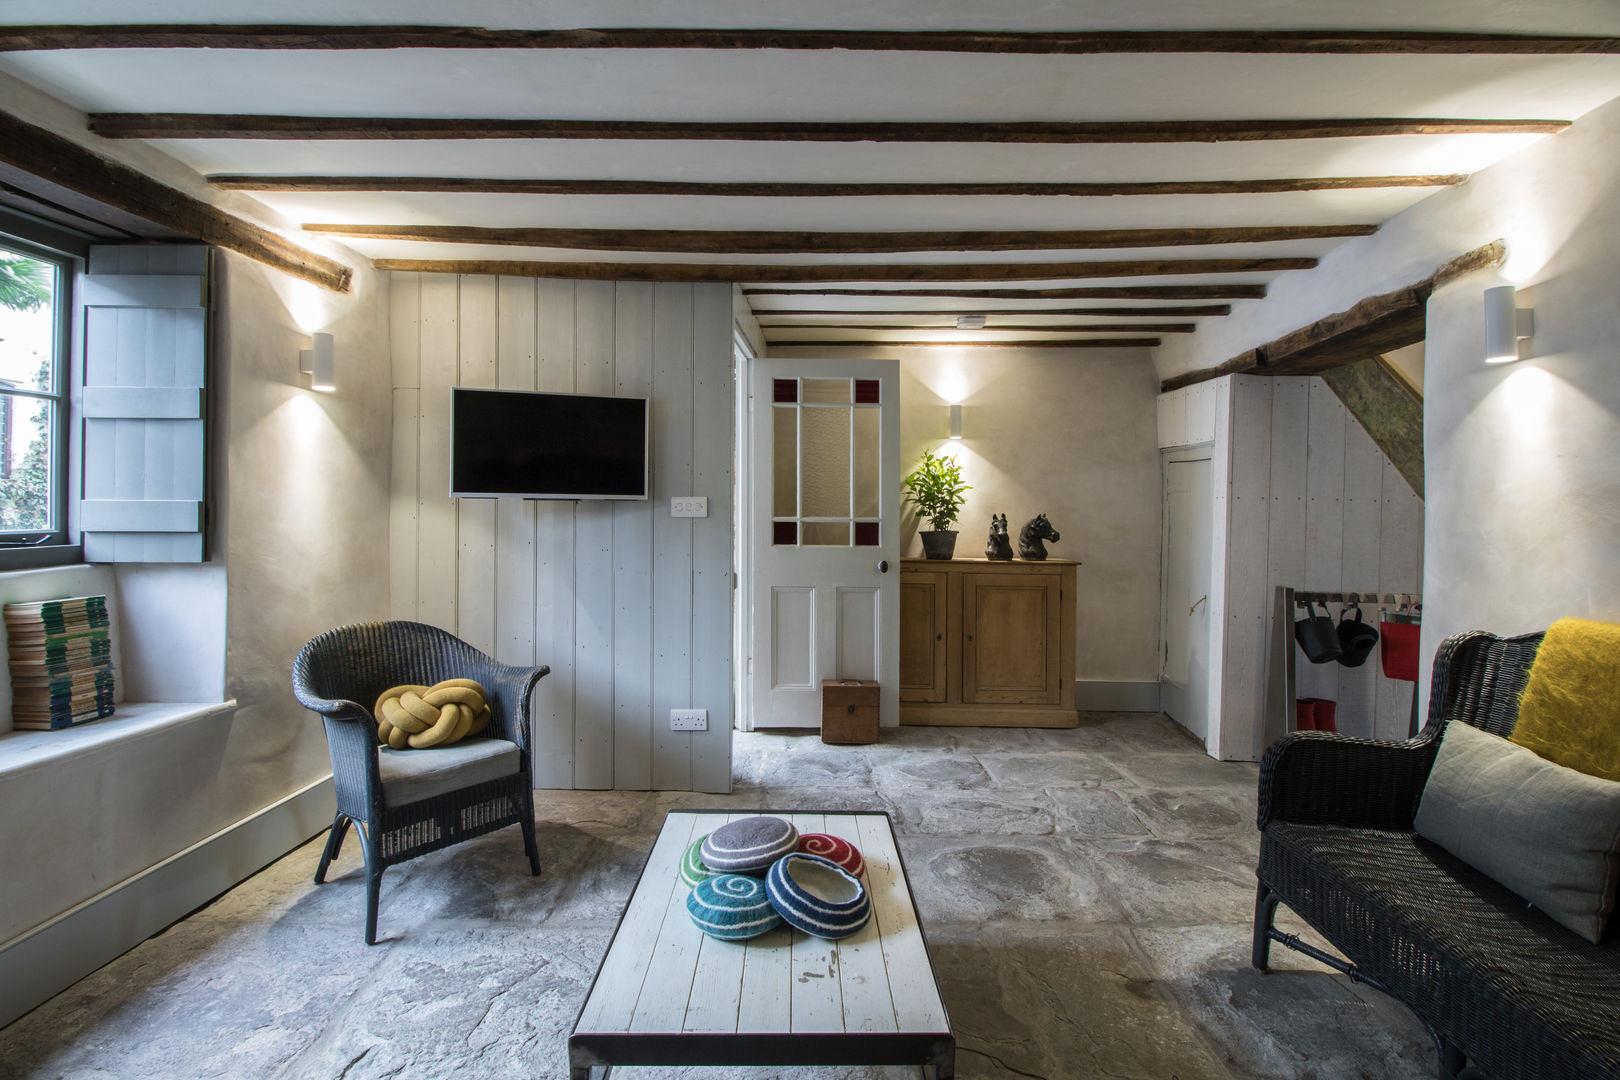 Miner's Cottage II: Living Room design storey Salones rústicos rústicos shabby chic,living room,living room